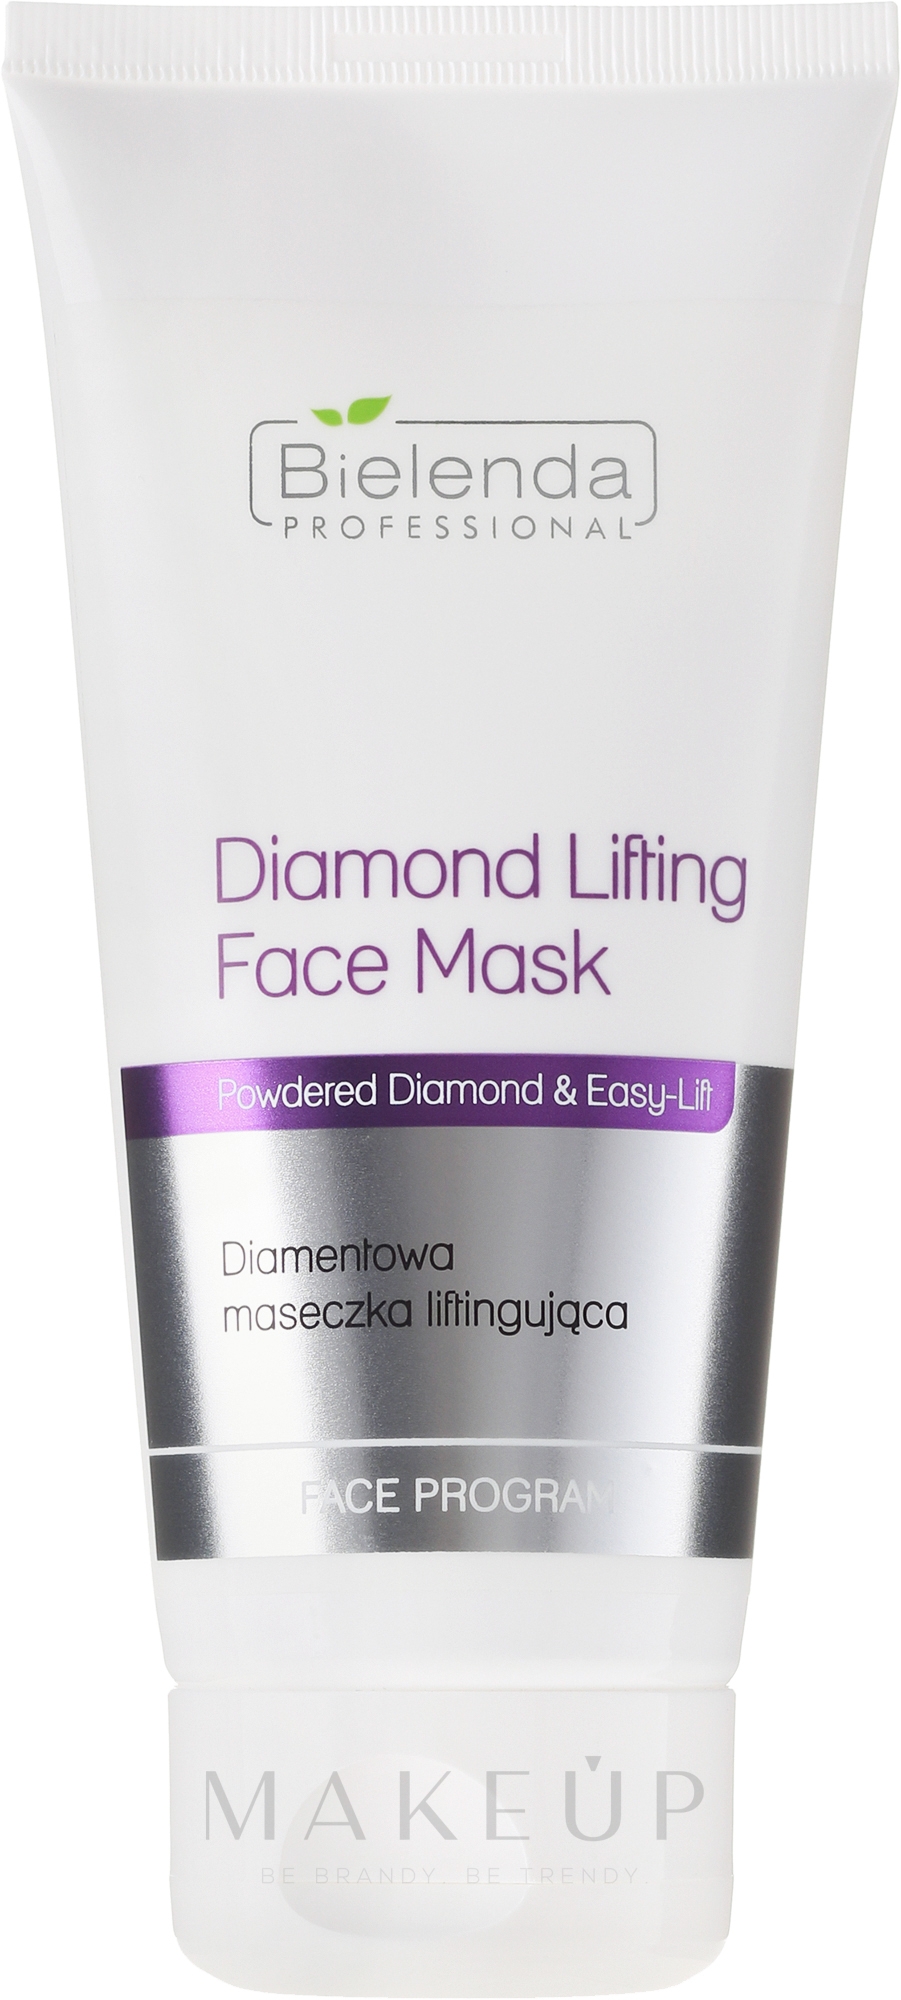 Gesichtsmaske mit Lifting-Effekt - Bielenda Professional Face Program Diamond Lifting Face Mask — Foto 175 ml